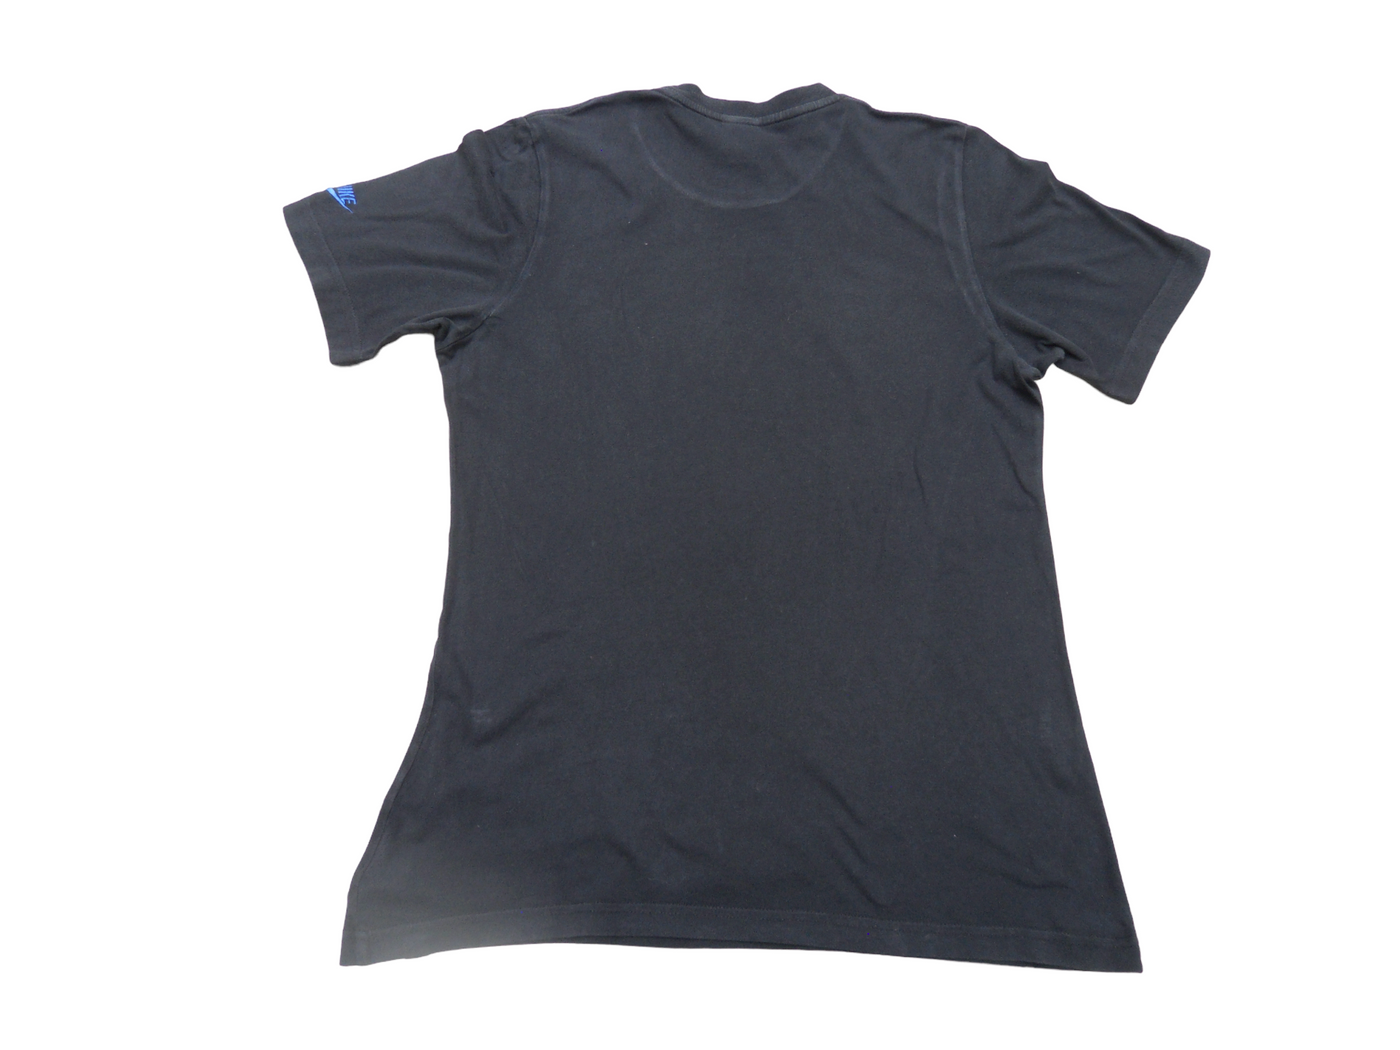 Vintage Nike Women's Black T-Shirt Size - M